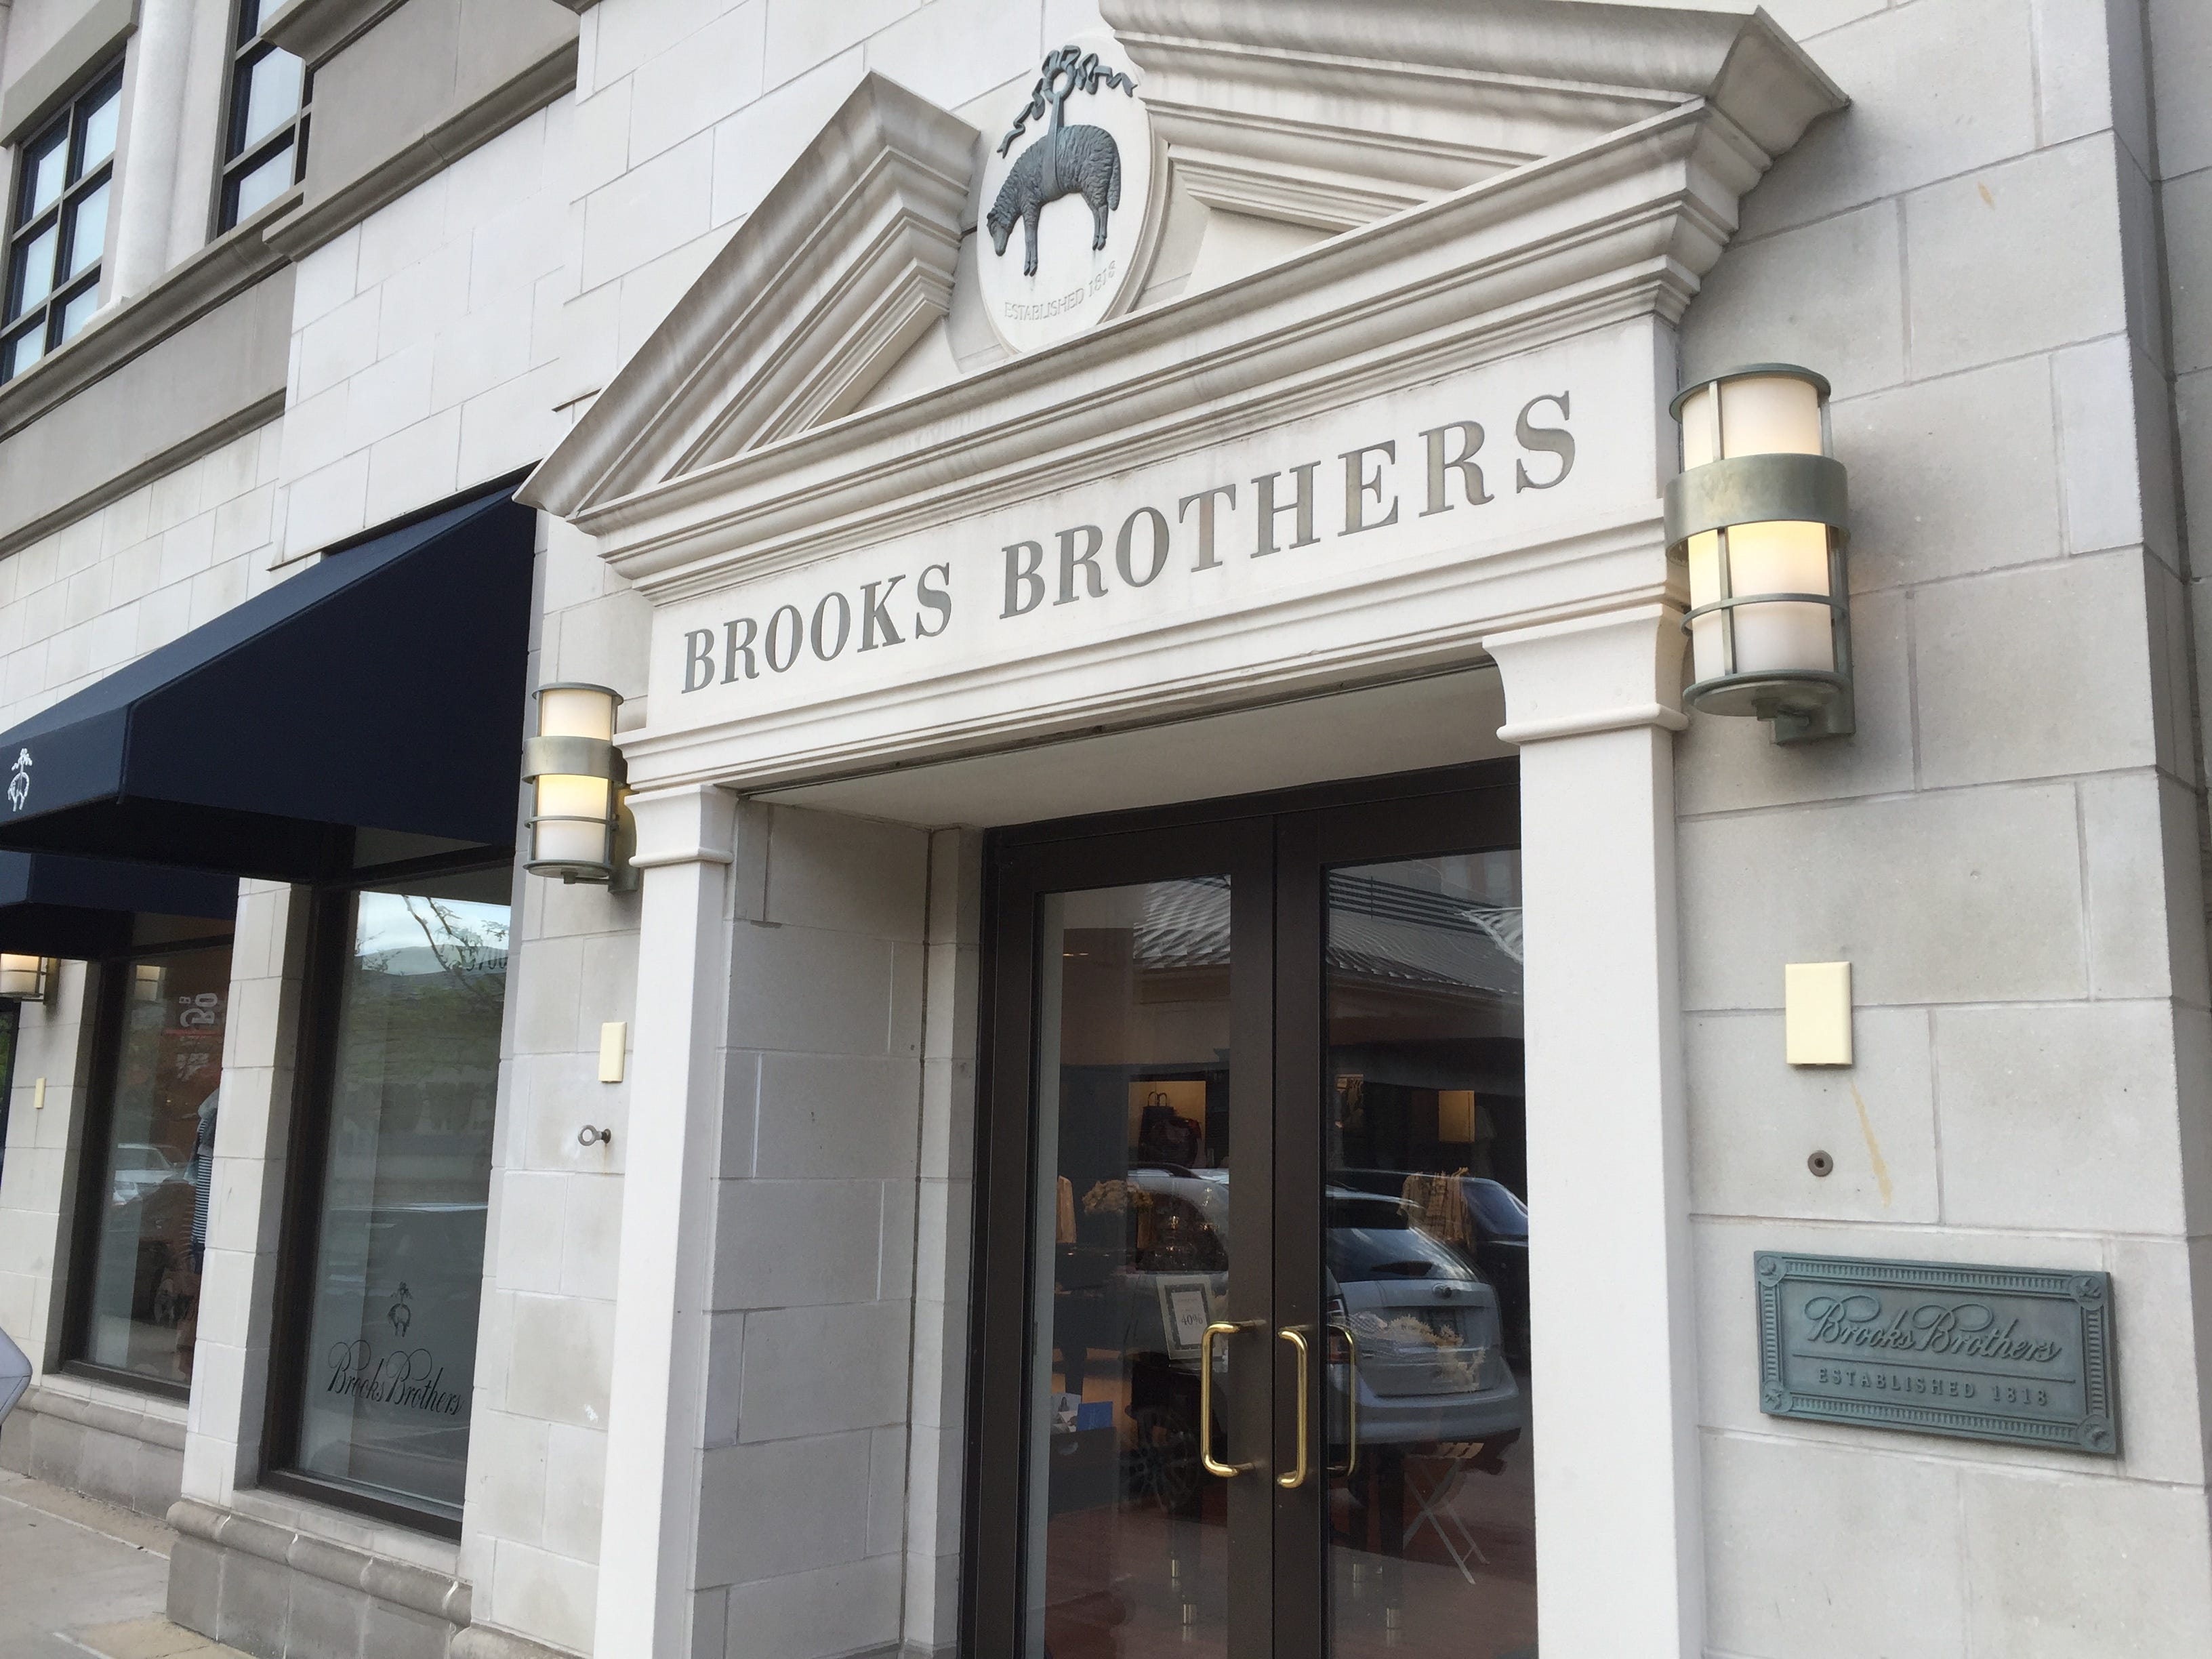 Brooks Brothers at Bayshore closed 